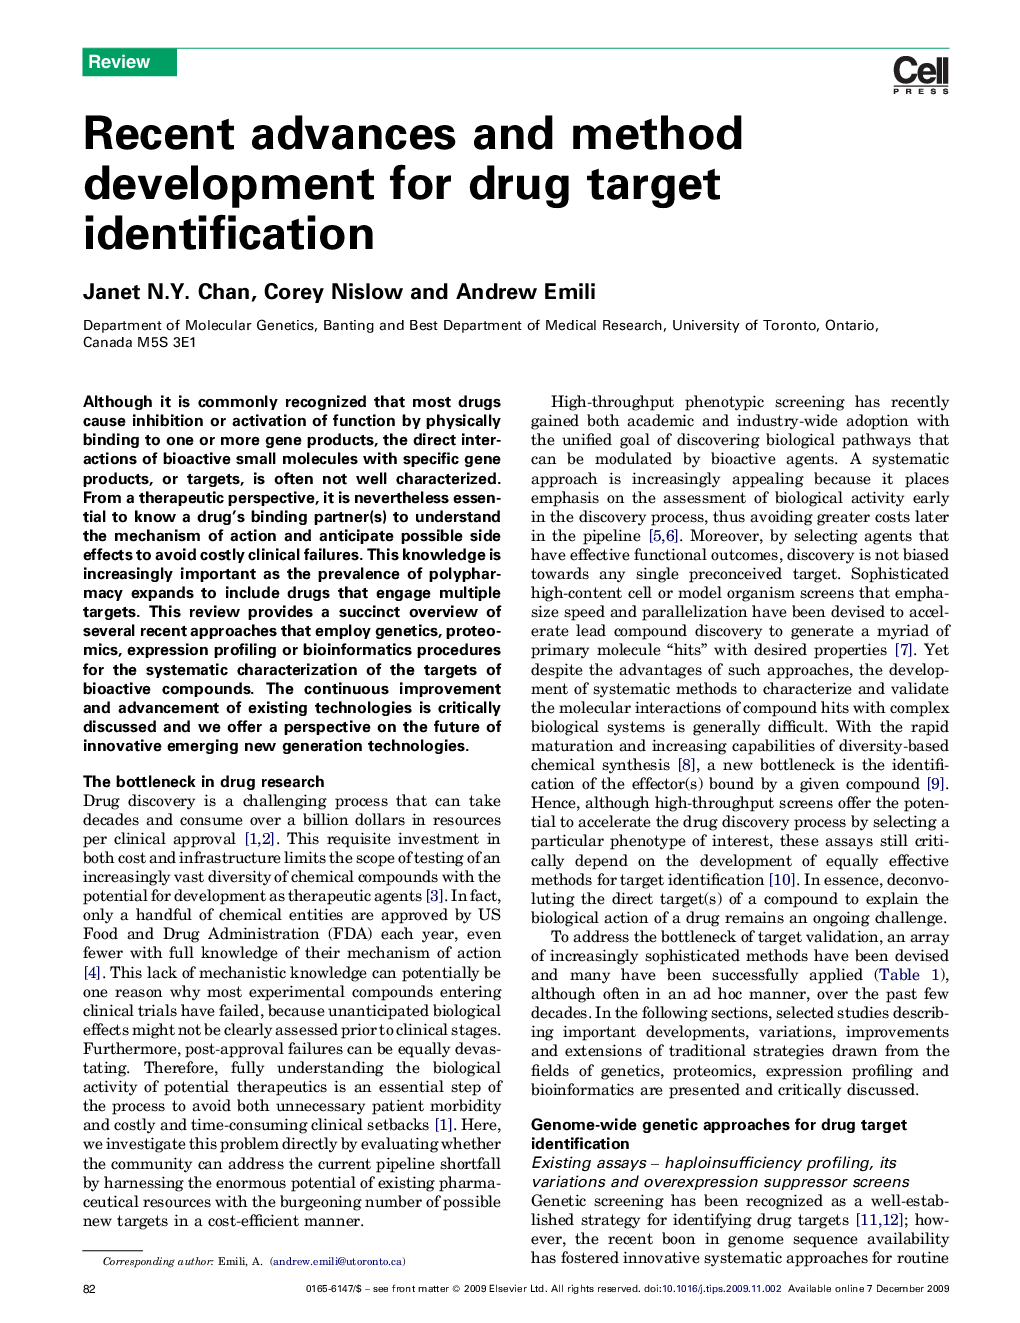 Recent advances and method development for drug target identification